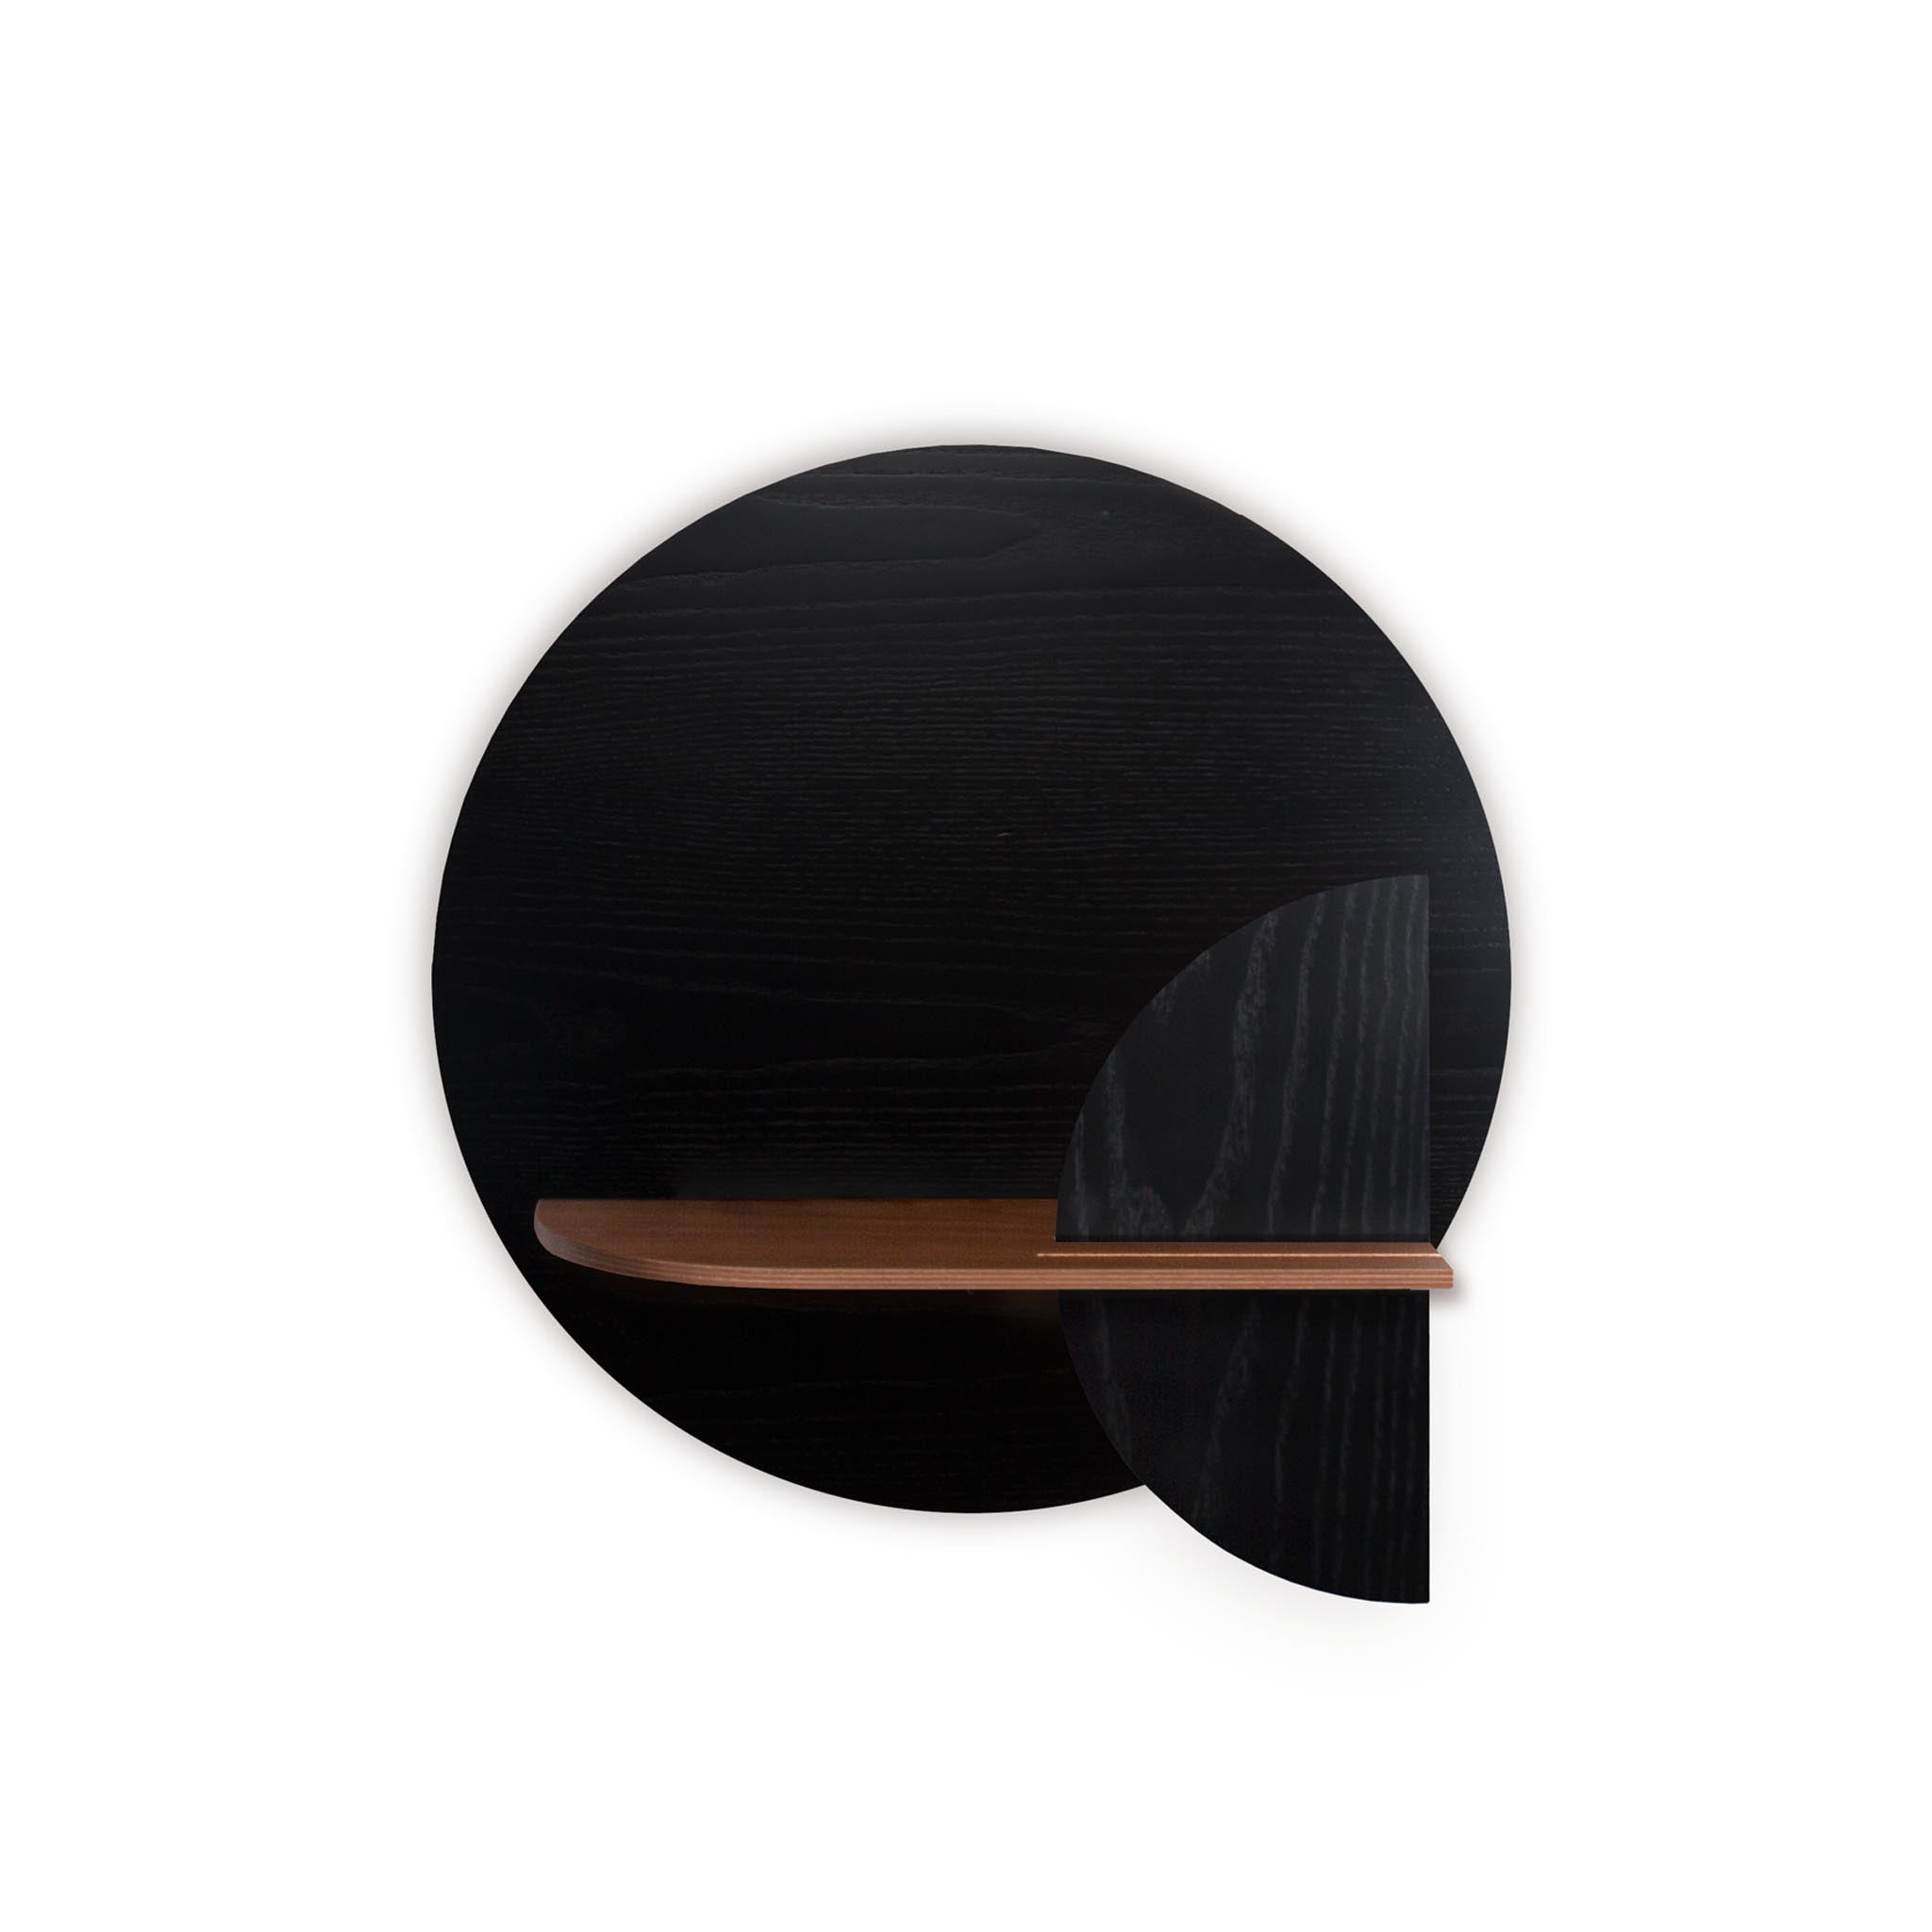 Alba wall shelf DUO · Black circle